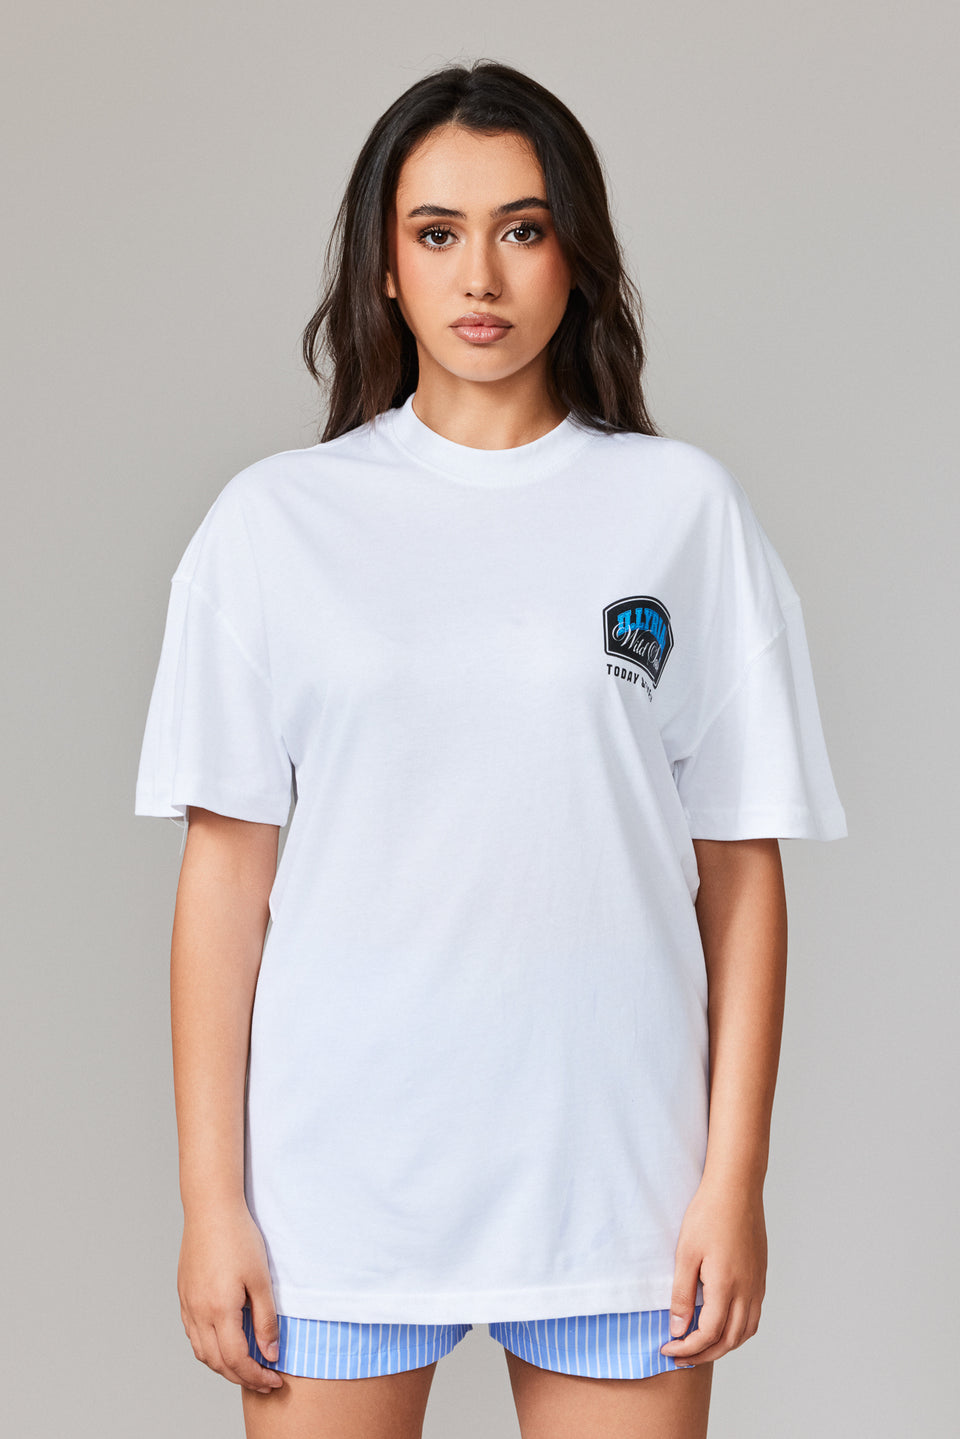 Illyrian Wild Souls T-shirt - White